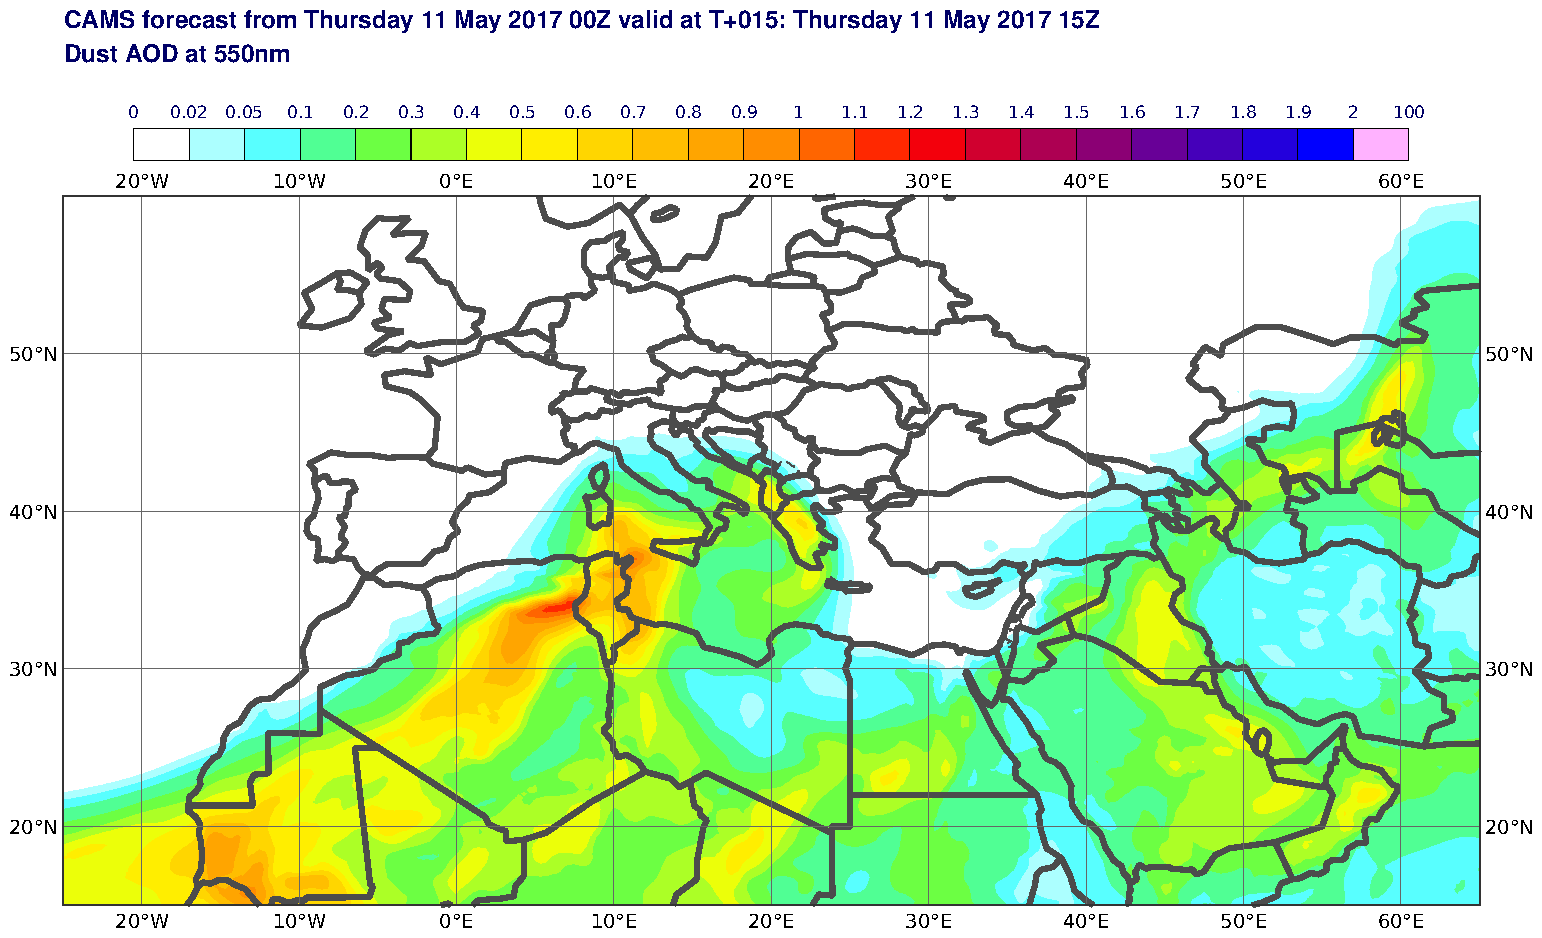 Dust AOD at 550nm valid at T15 - 2017-05-11 15:00